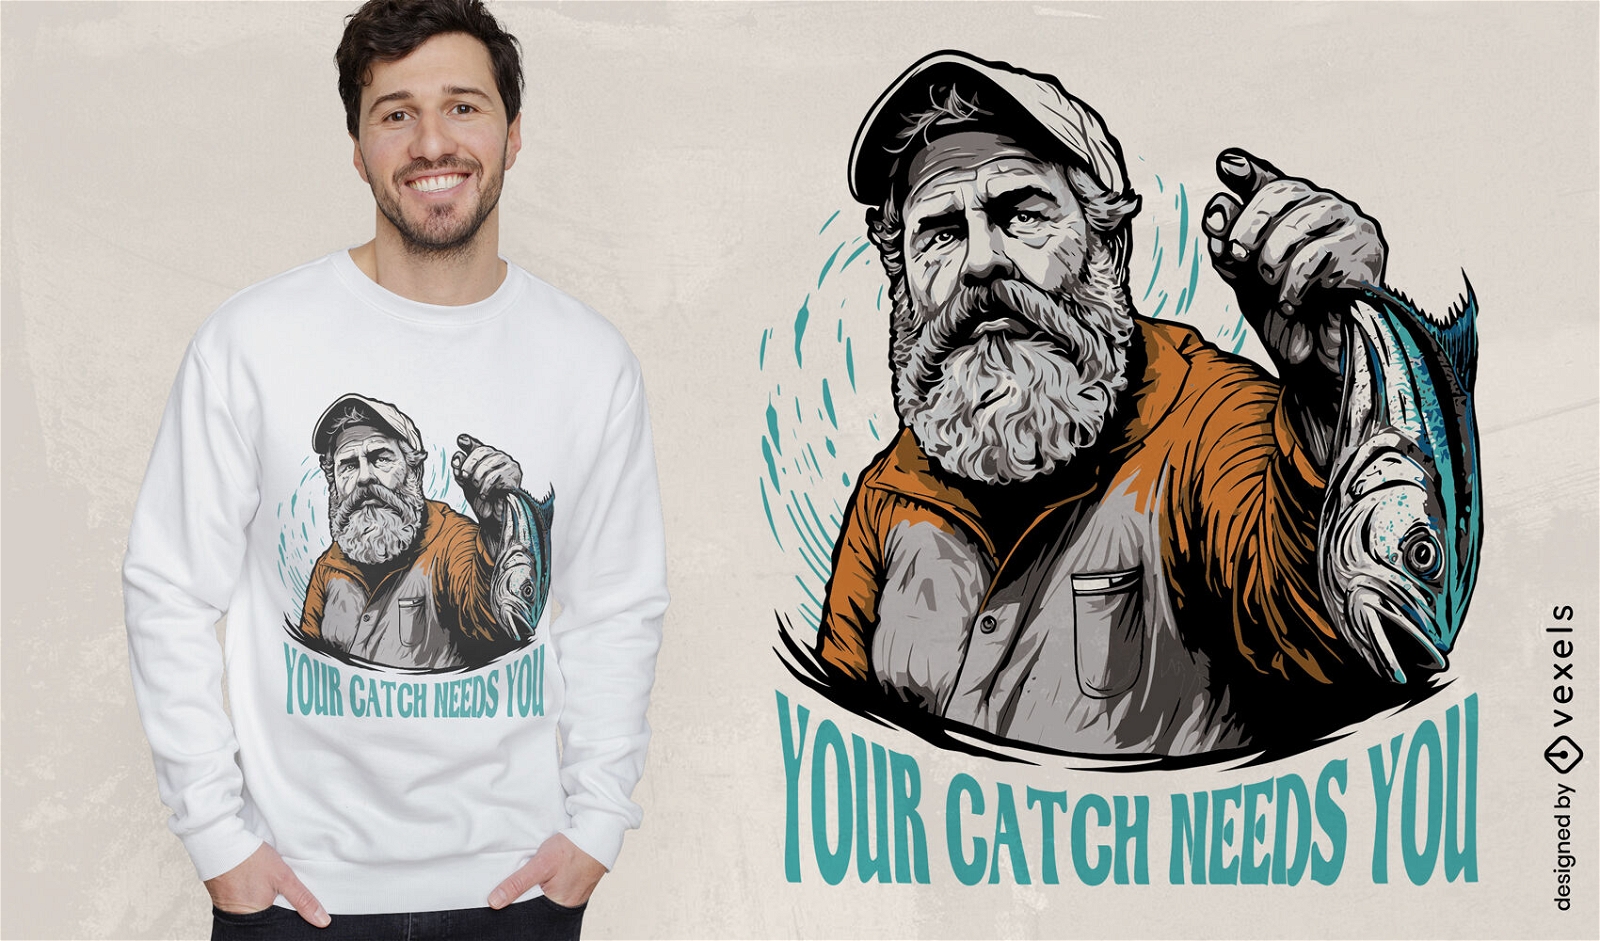 Your catch needs you t-shirt design